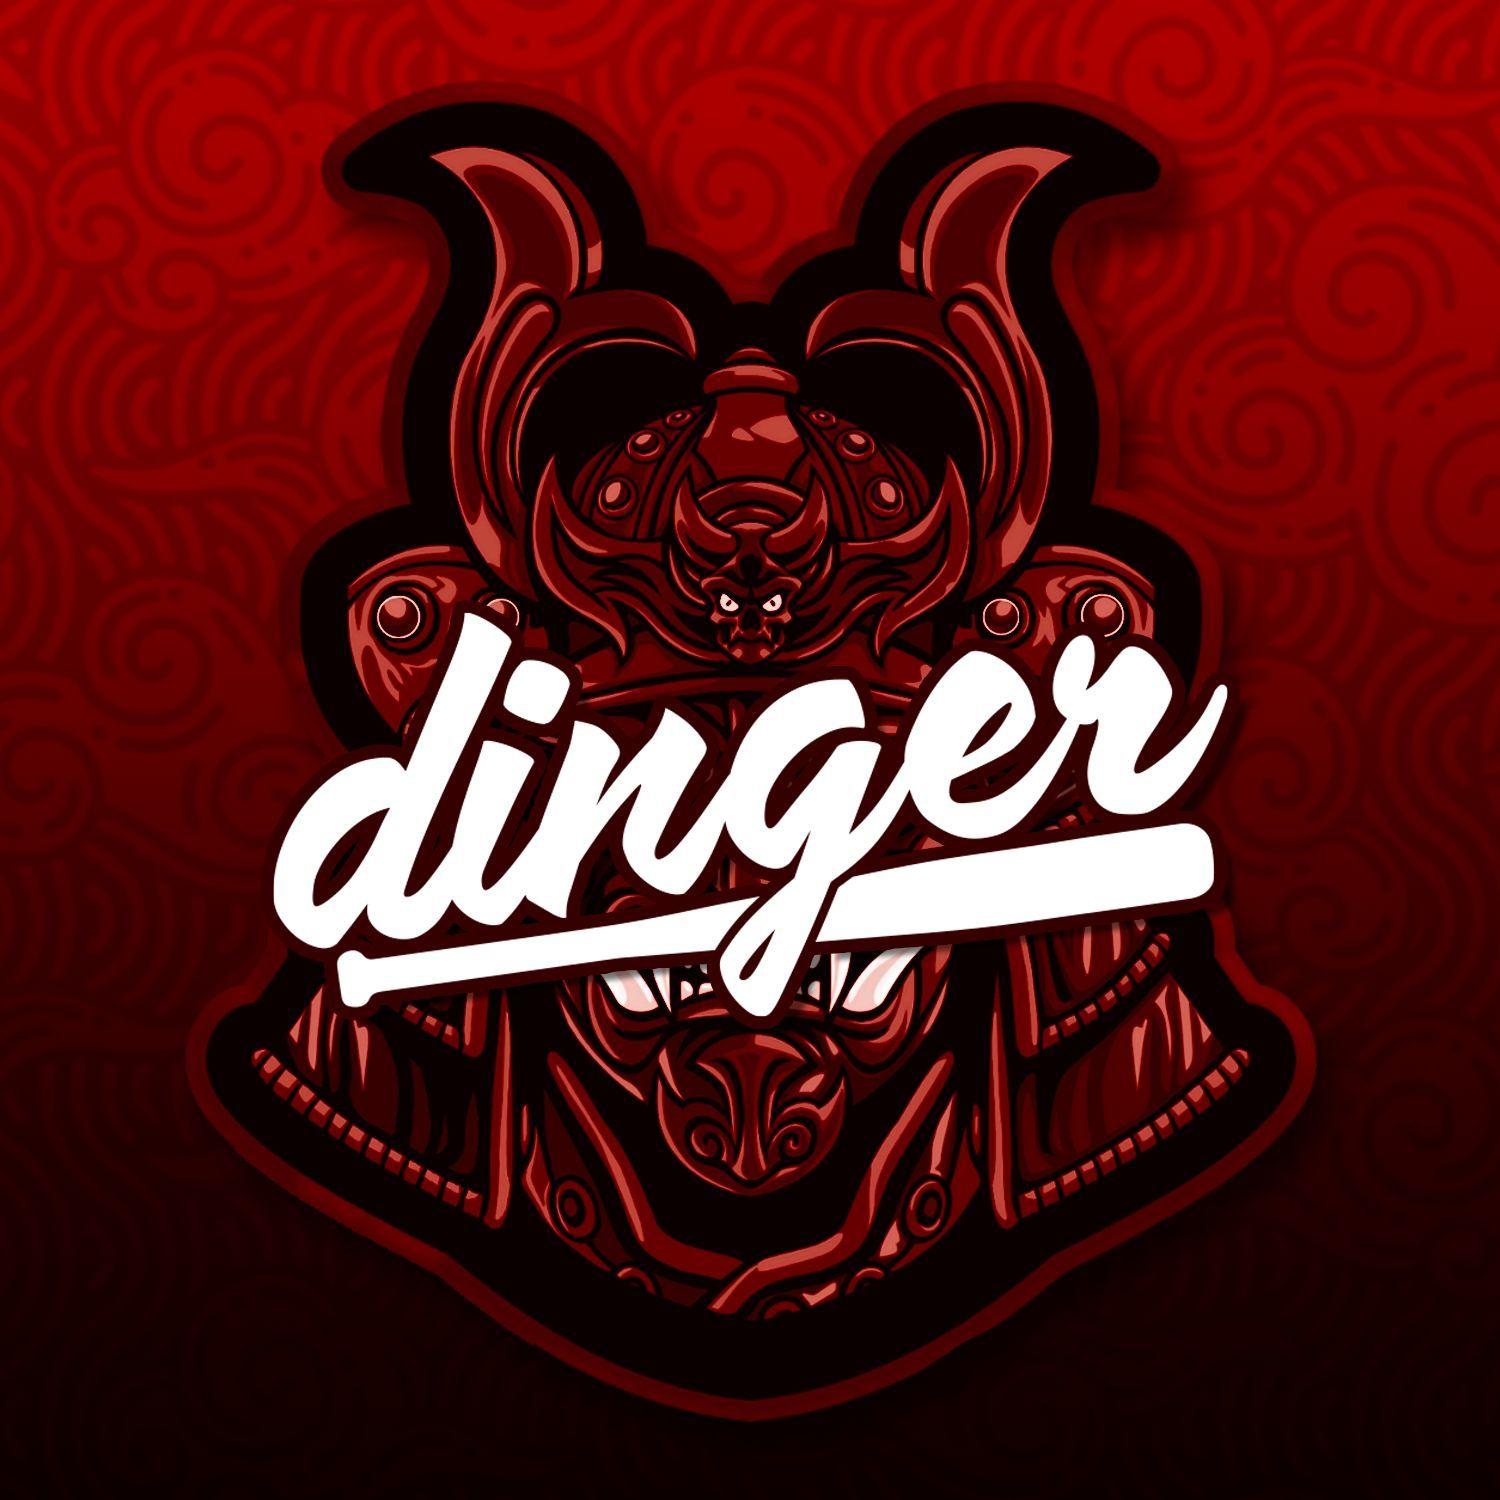 Player _d1nger_ avatar